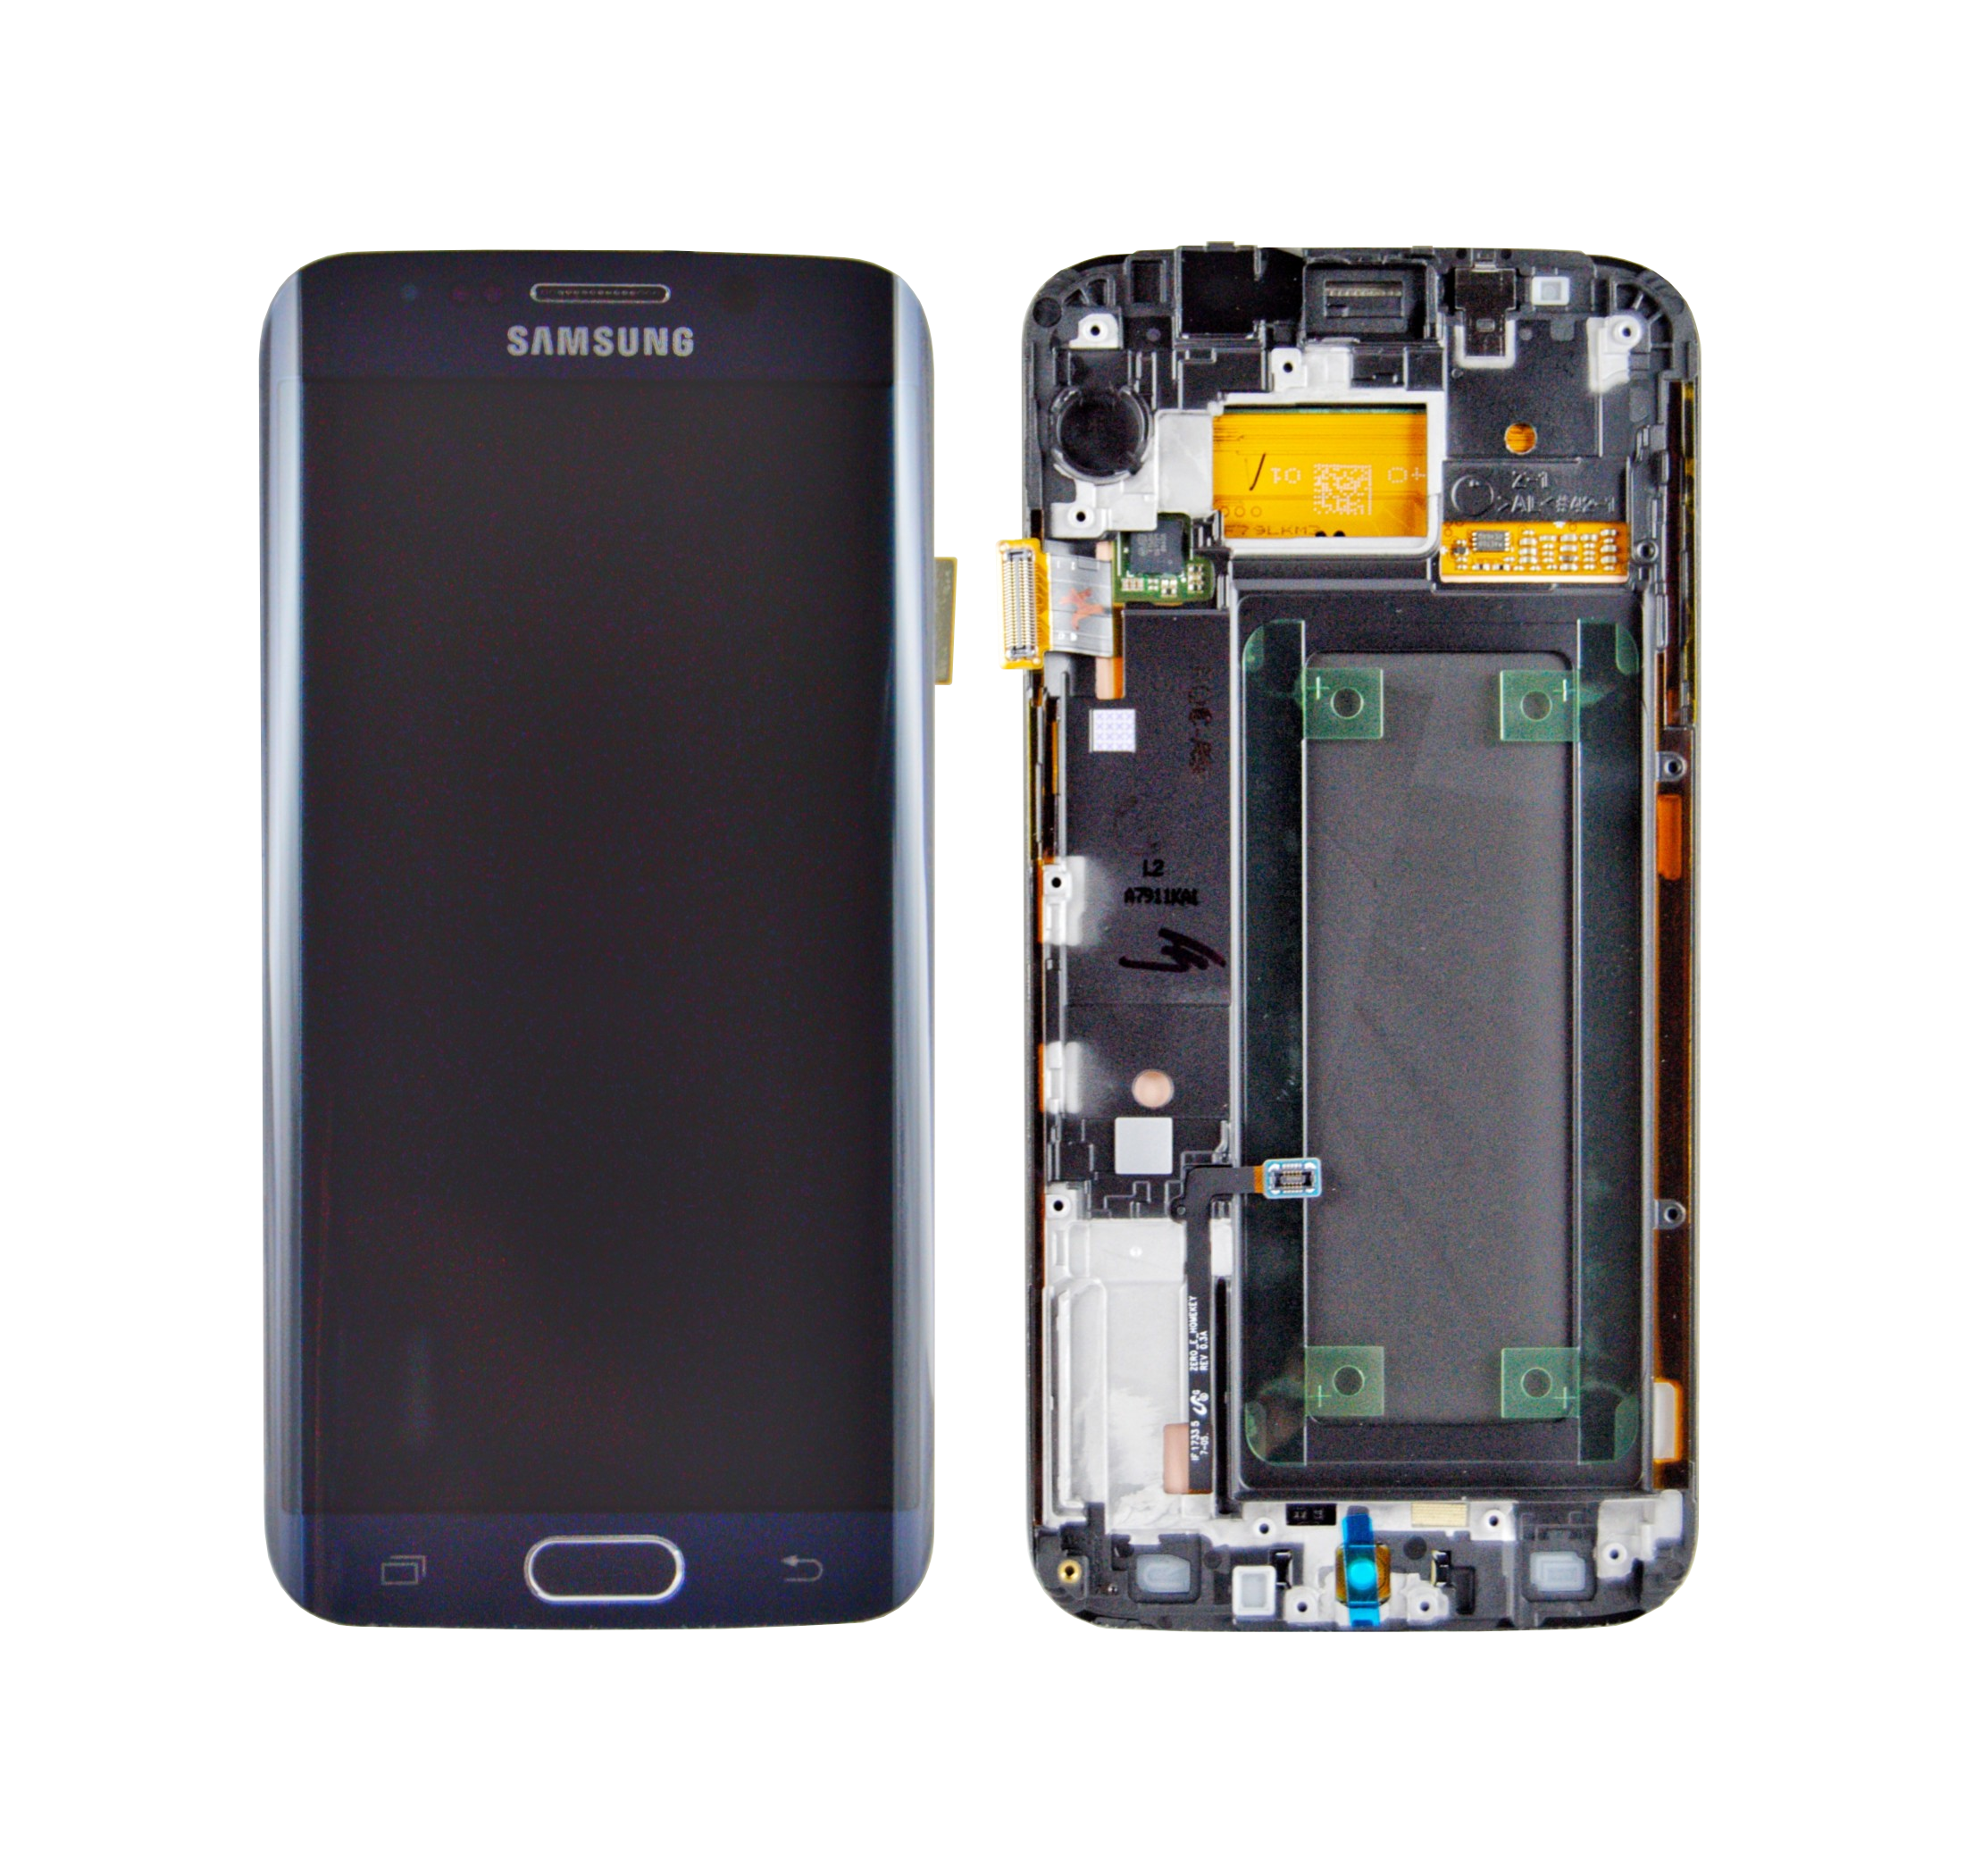 Samsung s6 g925f. Дисплей Samsung g925f. Дисплей самсунг s6 Edge. Samsung s6 g925f дисплей. Galaxy s6 экран